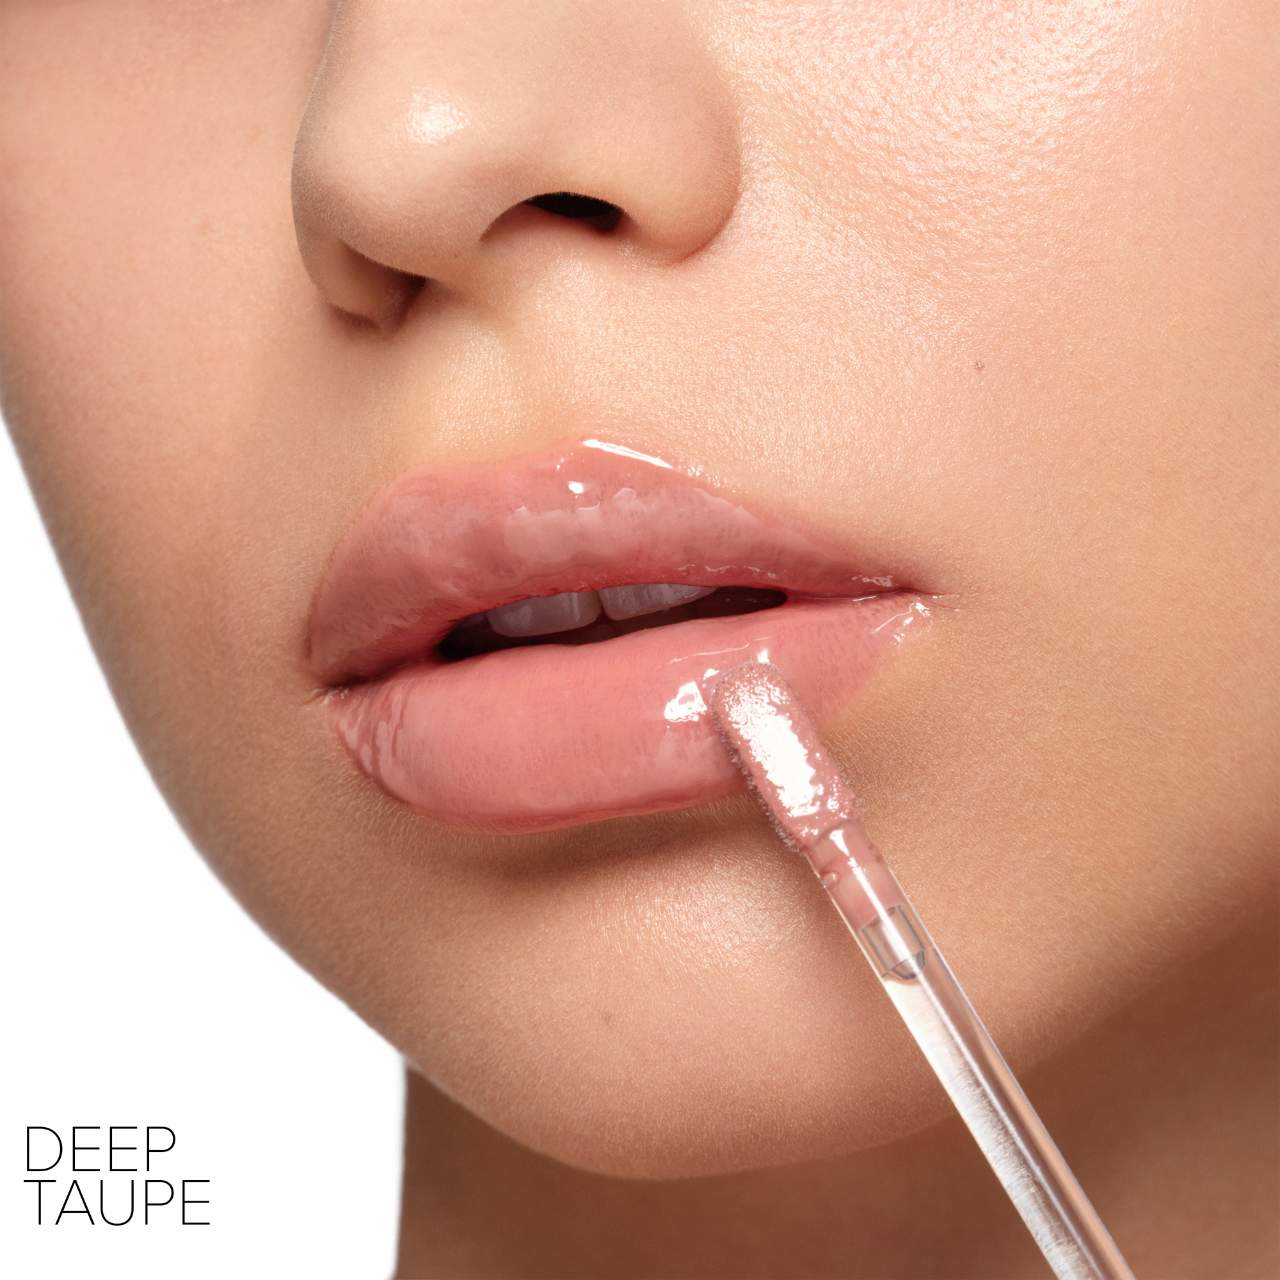 Anastasia Beverly Hills | Lip Luster Tinted Lip Gloss Set